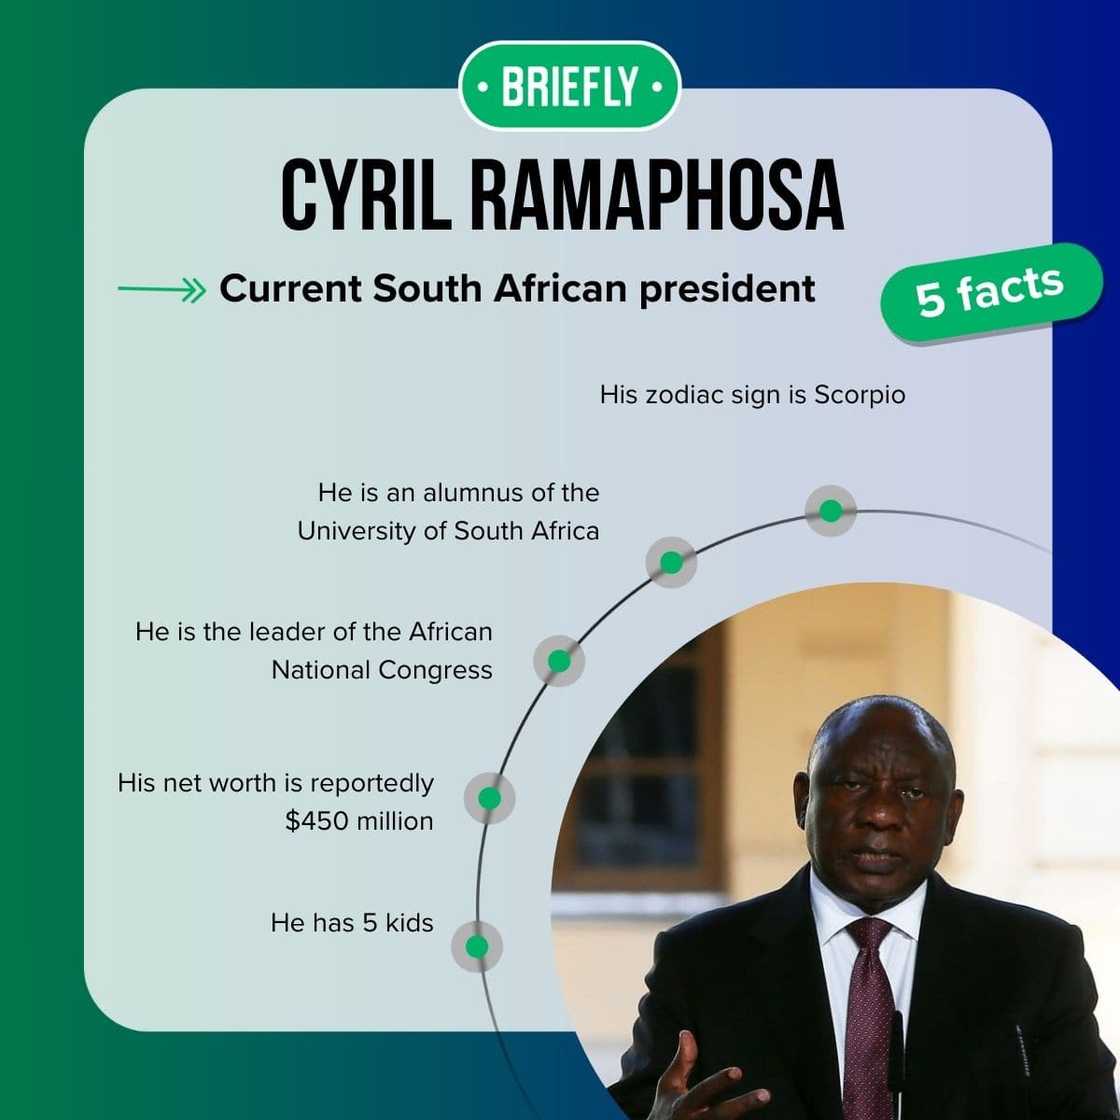 Cyril Ramaphosa's facts